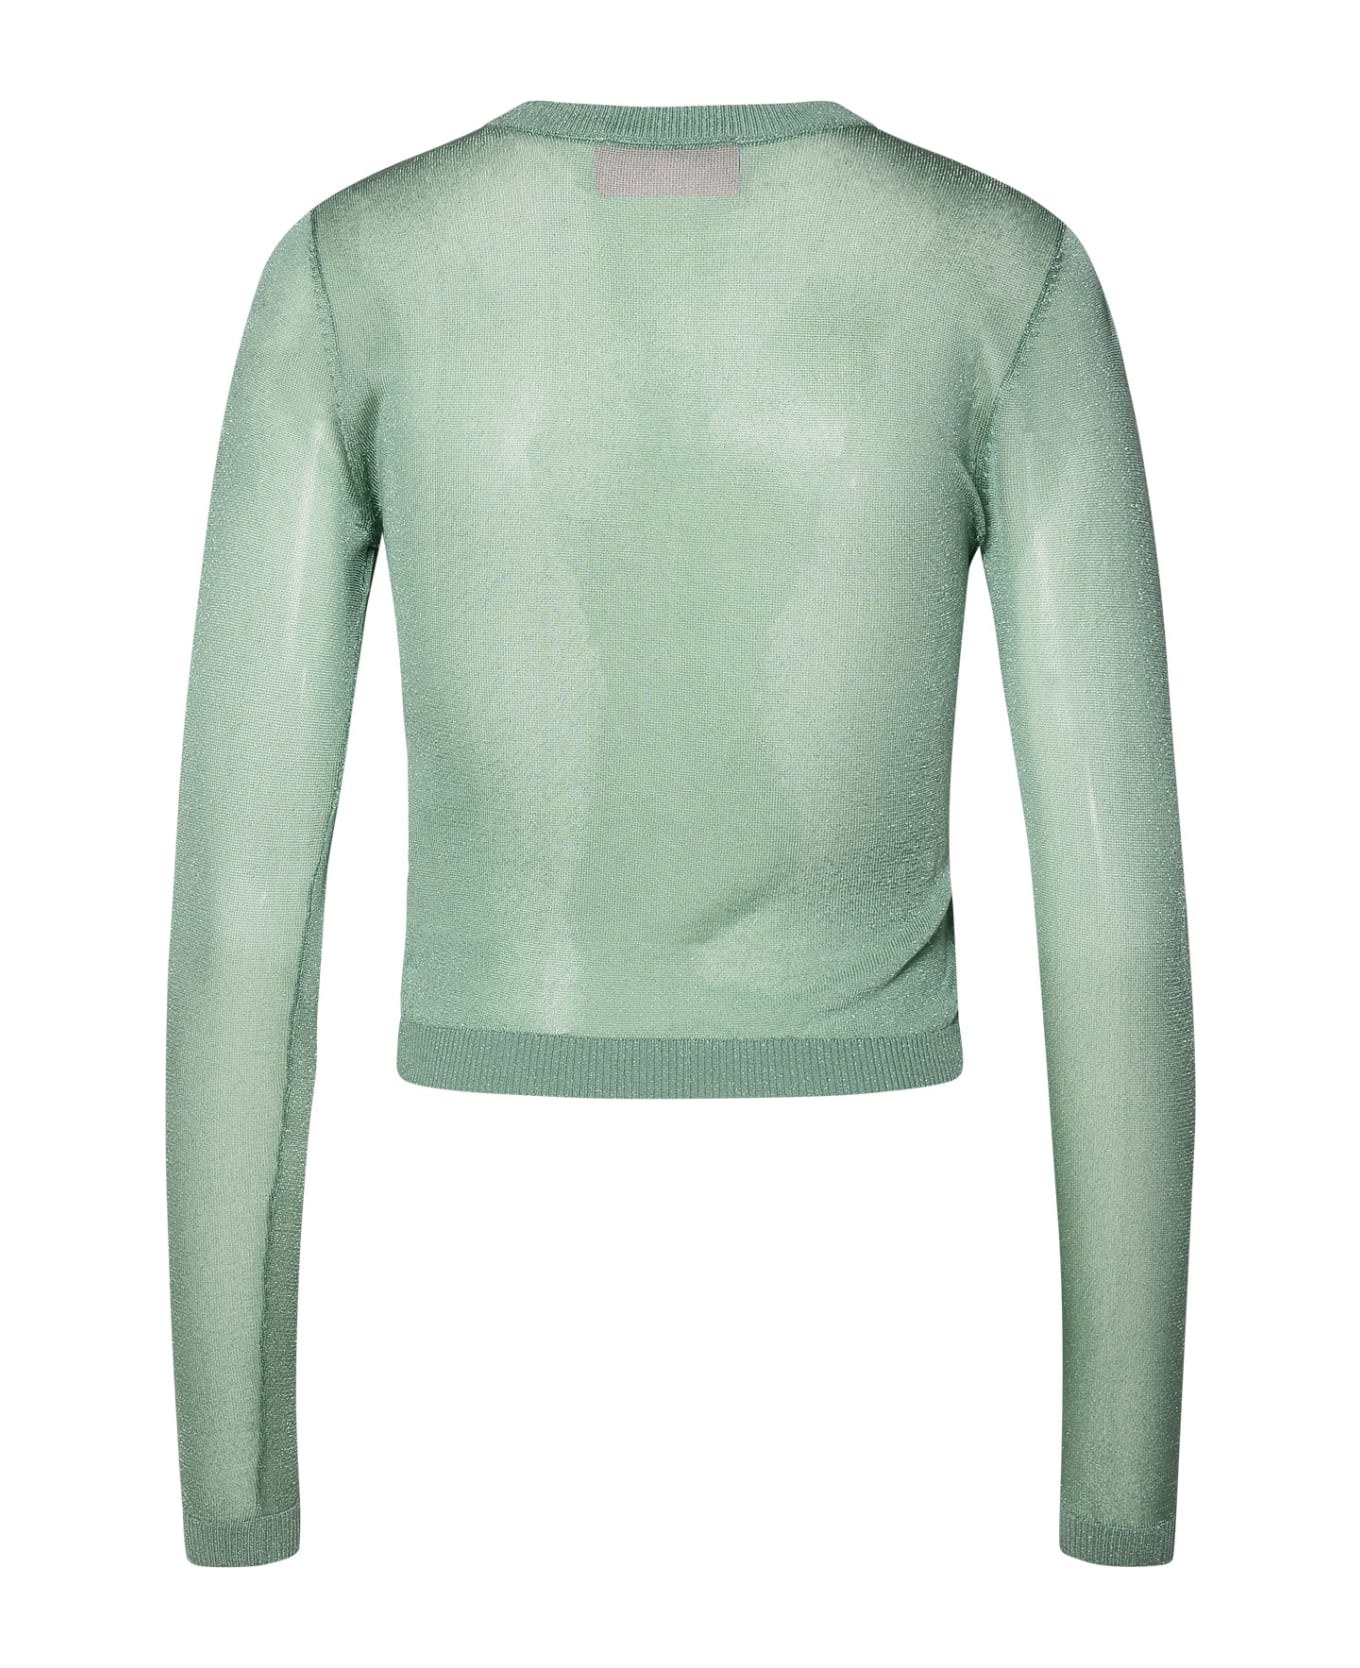 Chiara Ferragni Green Viscose Blend Sweater - Green ニットウェア